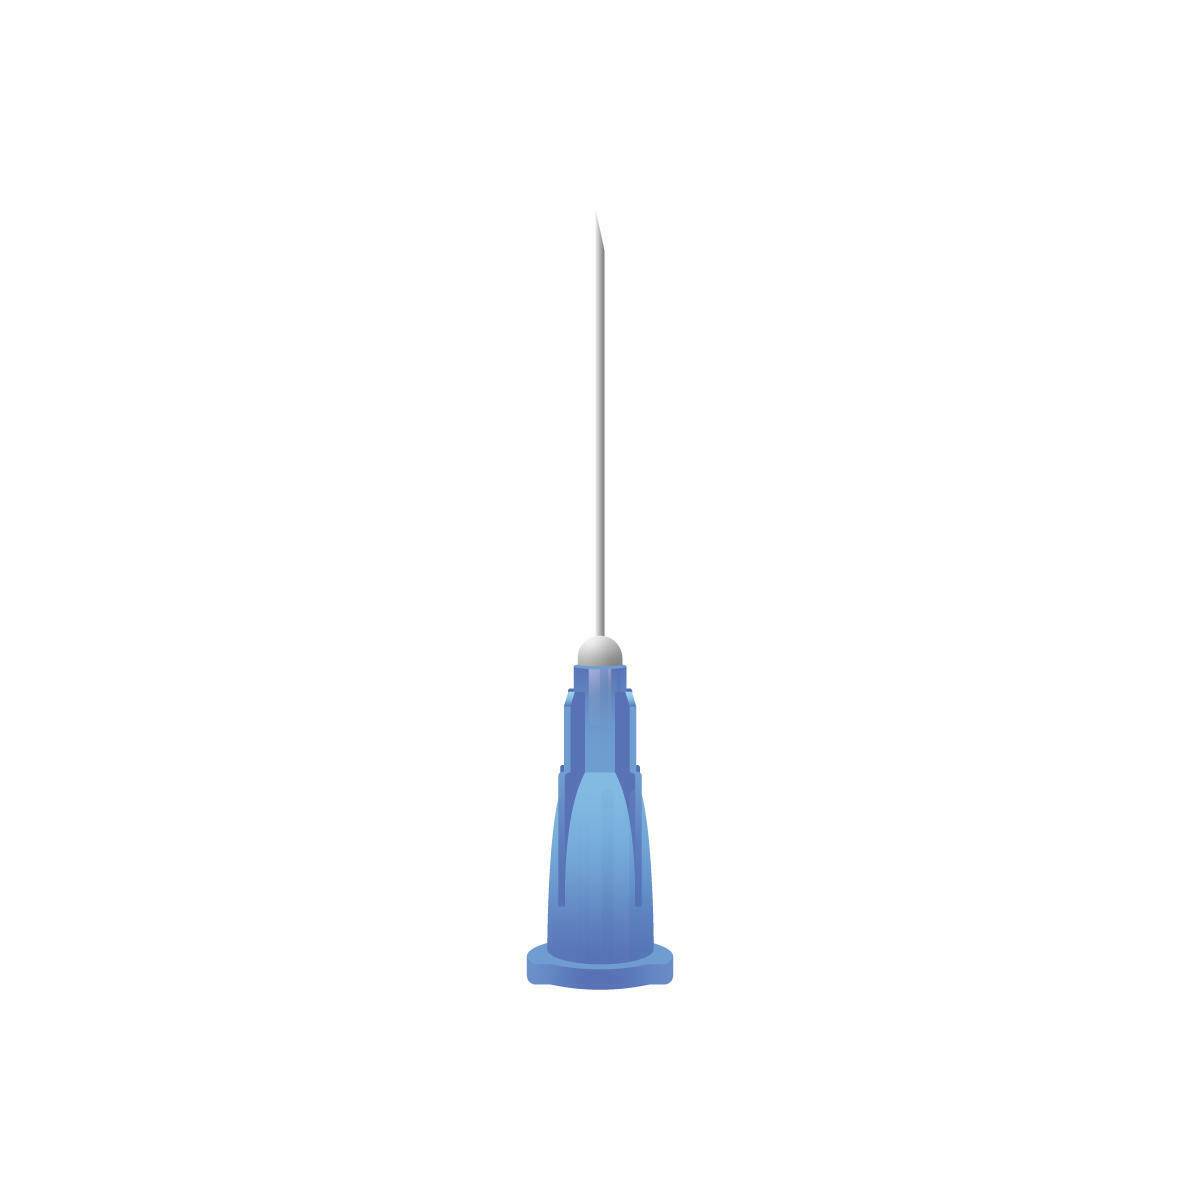 23g Blue 1 inch BD Microlance Needles - UKMEDI